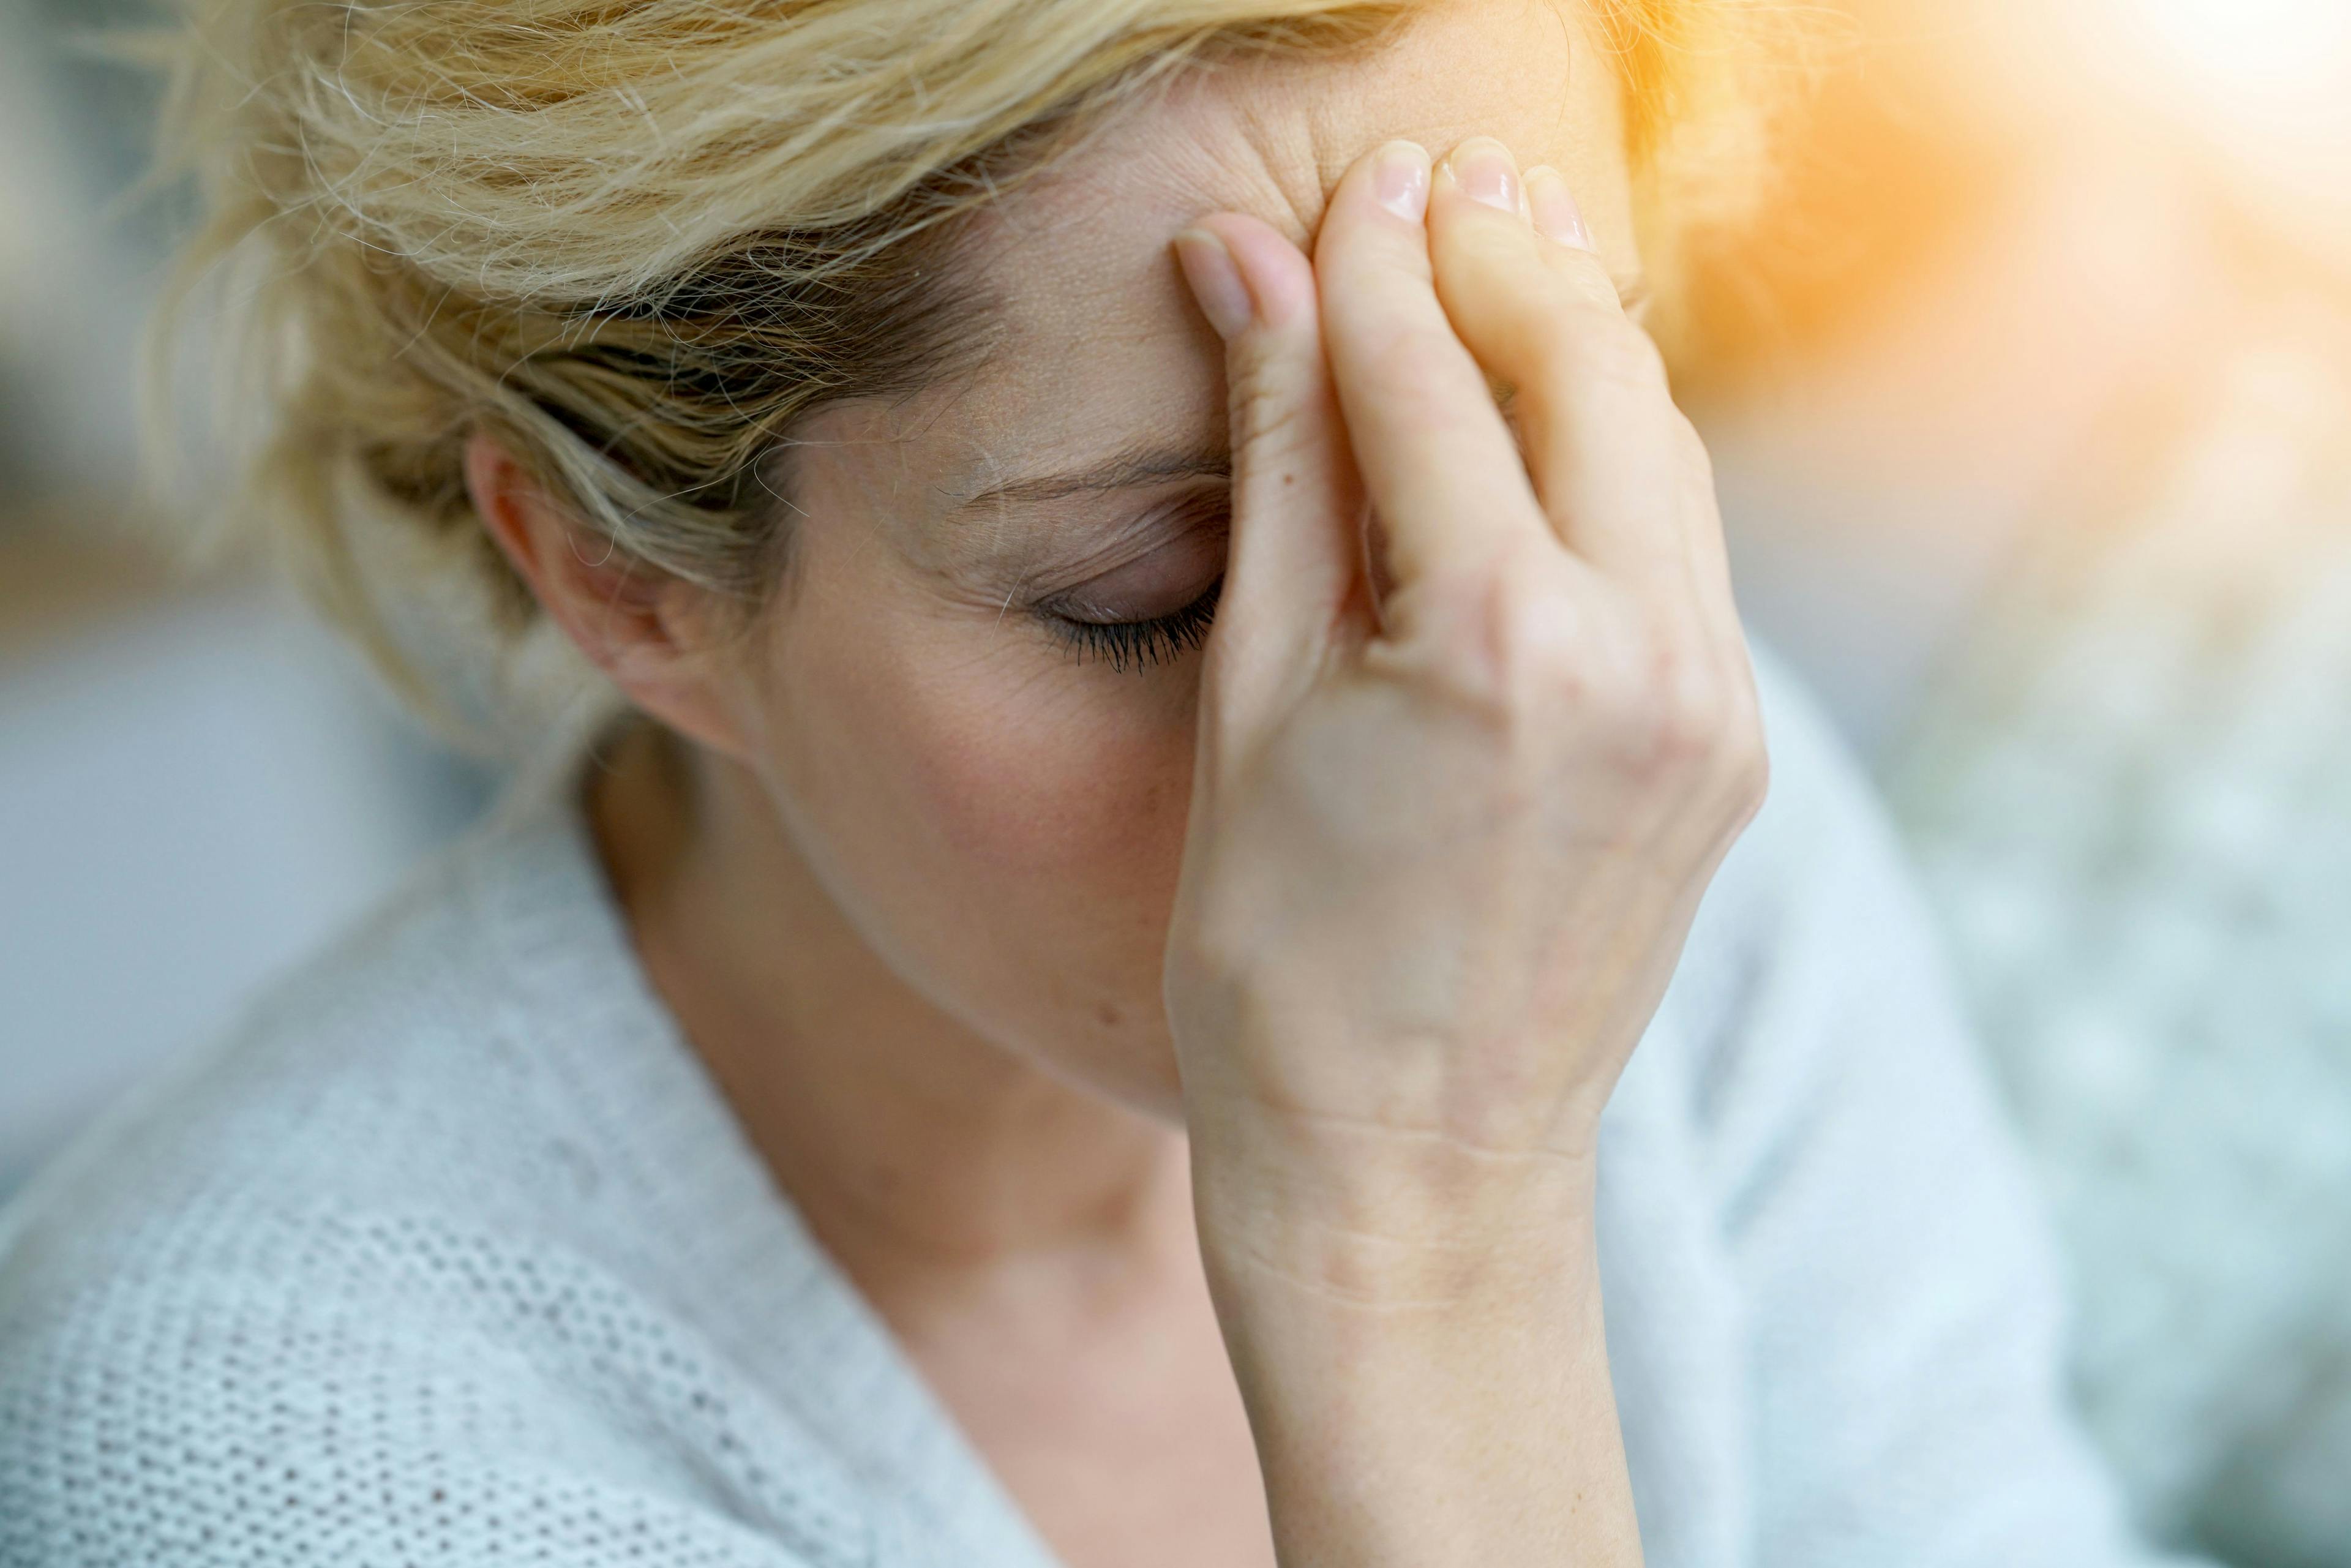 Portrait of middle-aged blond woman having a migraine - Image credit: goodluz | stock.adobe.com